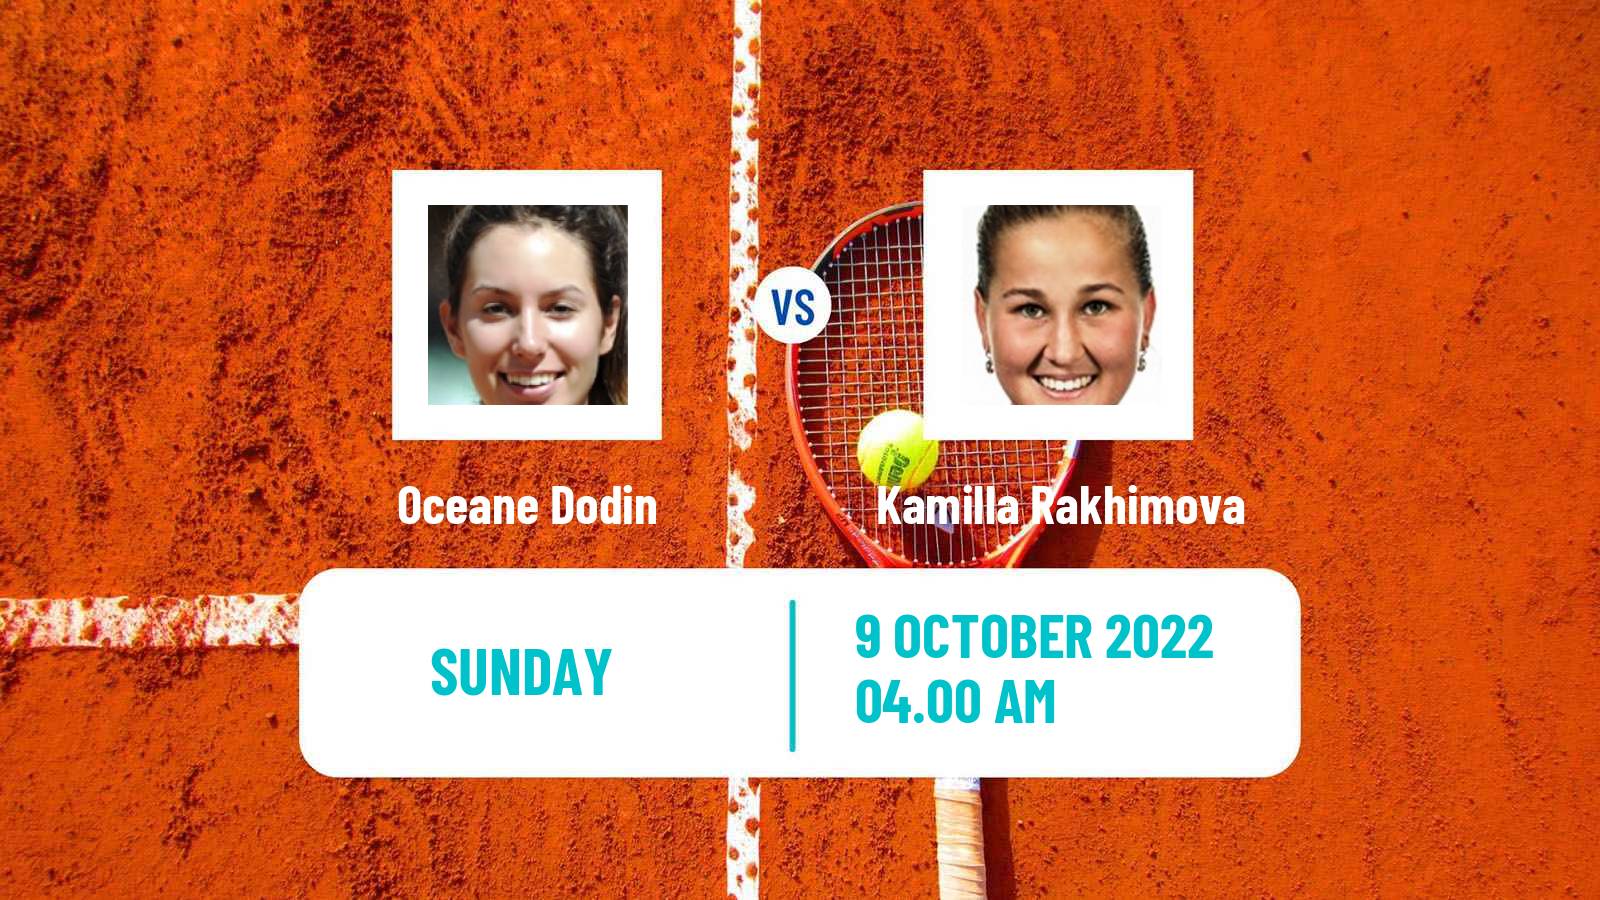 Tennis WTA Cluj Napoca Oceane Dodin - Kamilla Rakhimova